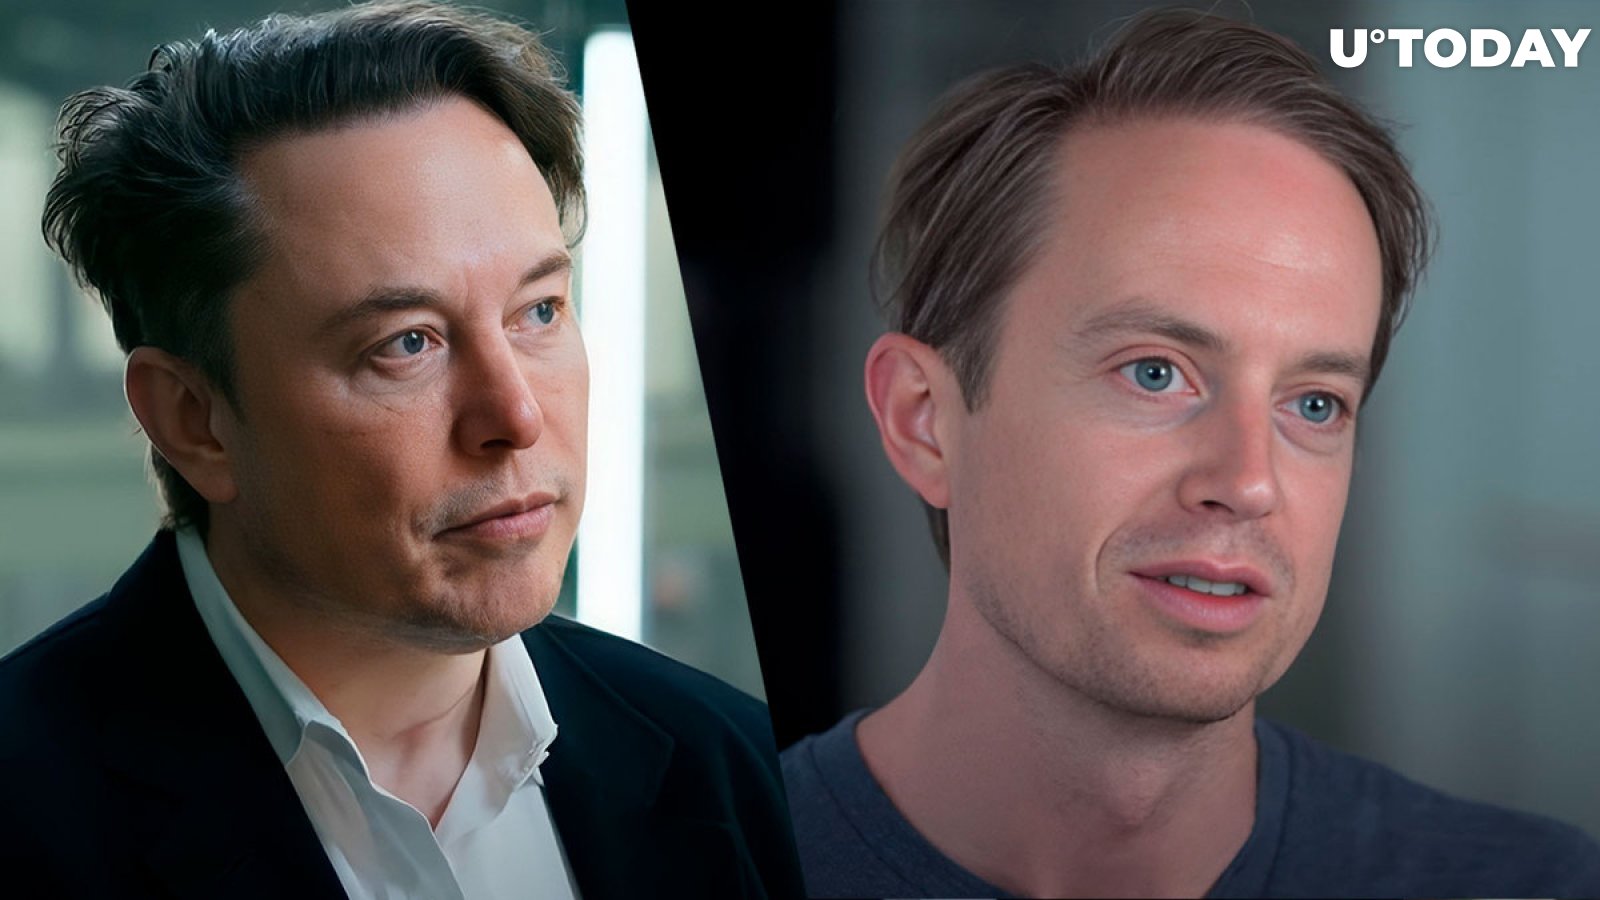 Bitcoiner Erik Voorhees and Former Binance Exec Start Rivaling Elon Musk's xAI: Details